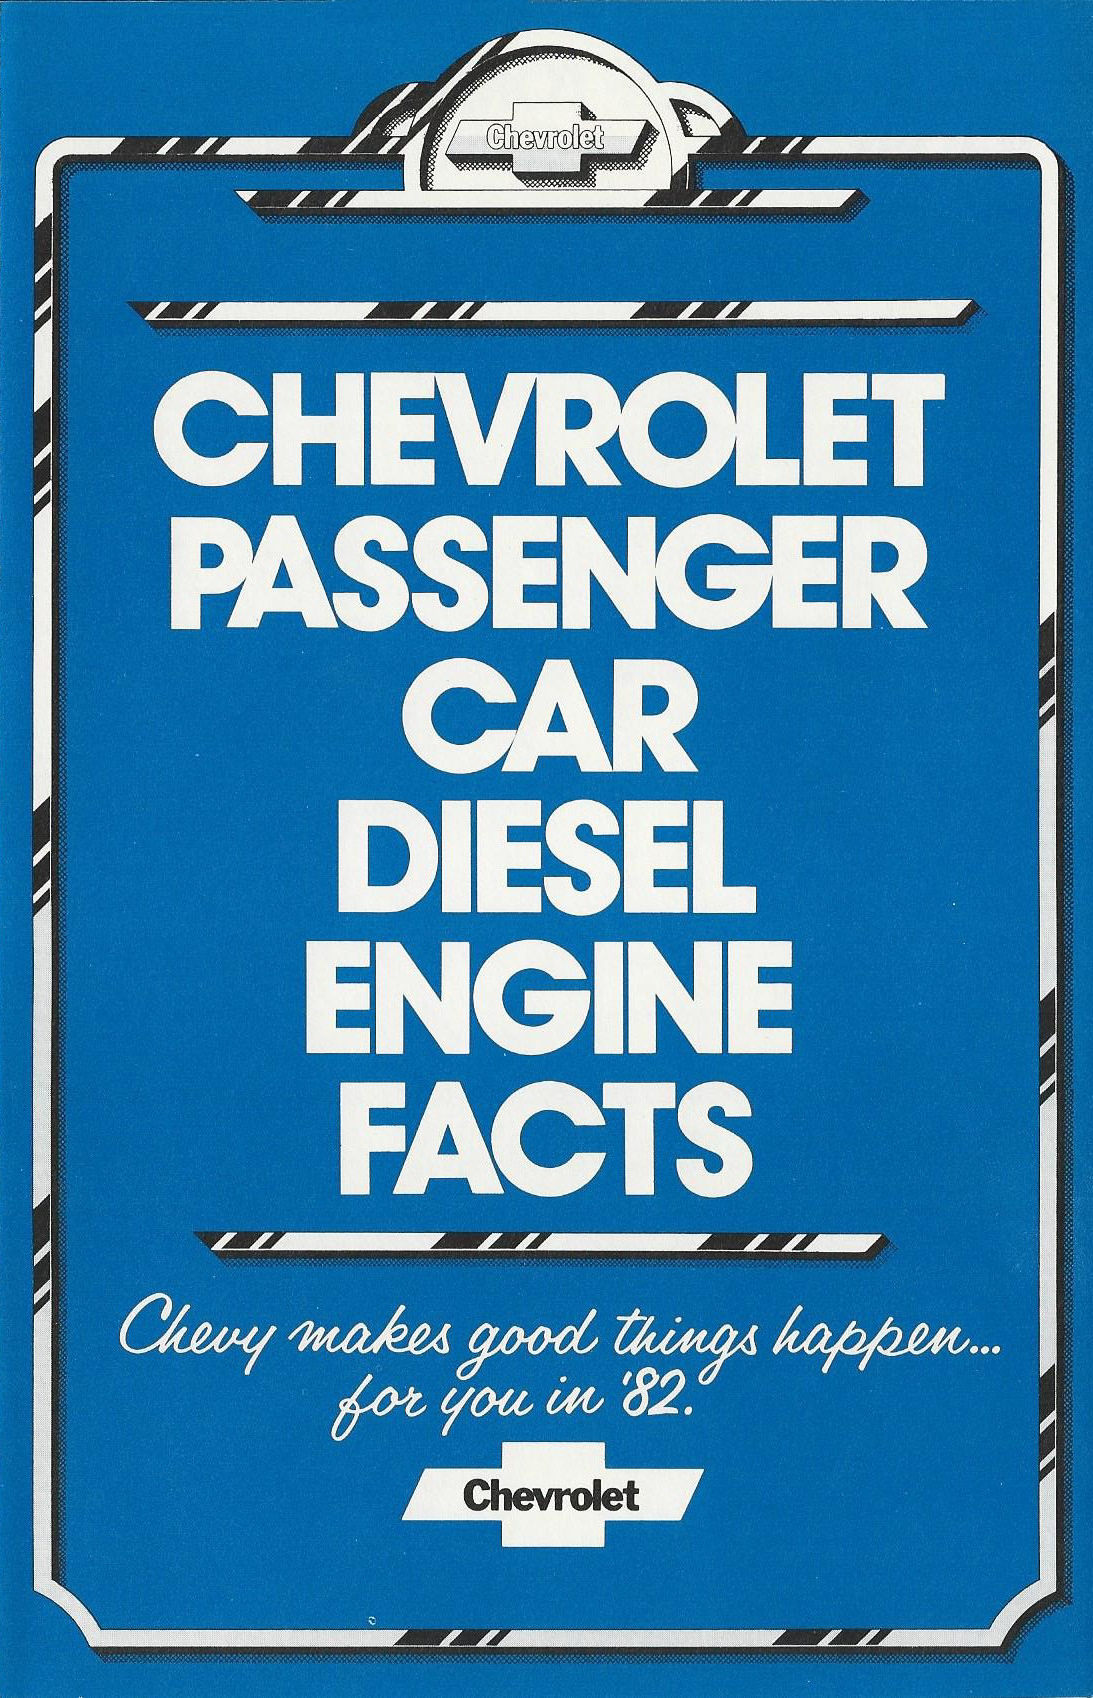 1982_Chevrolet_Car_Diesel_Facts-01